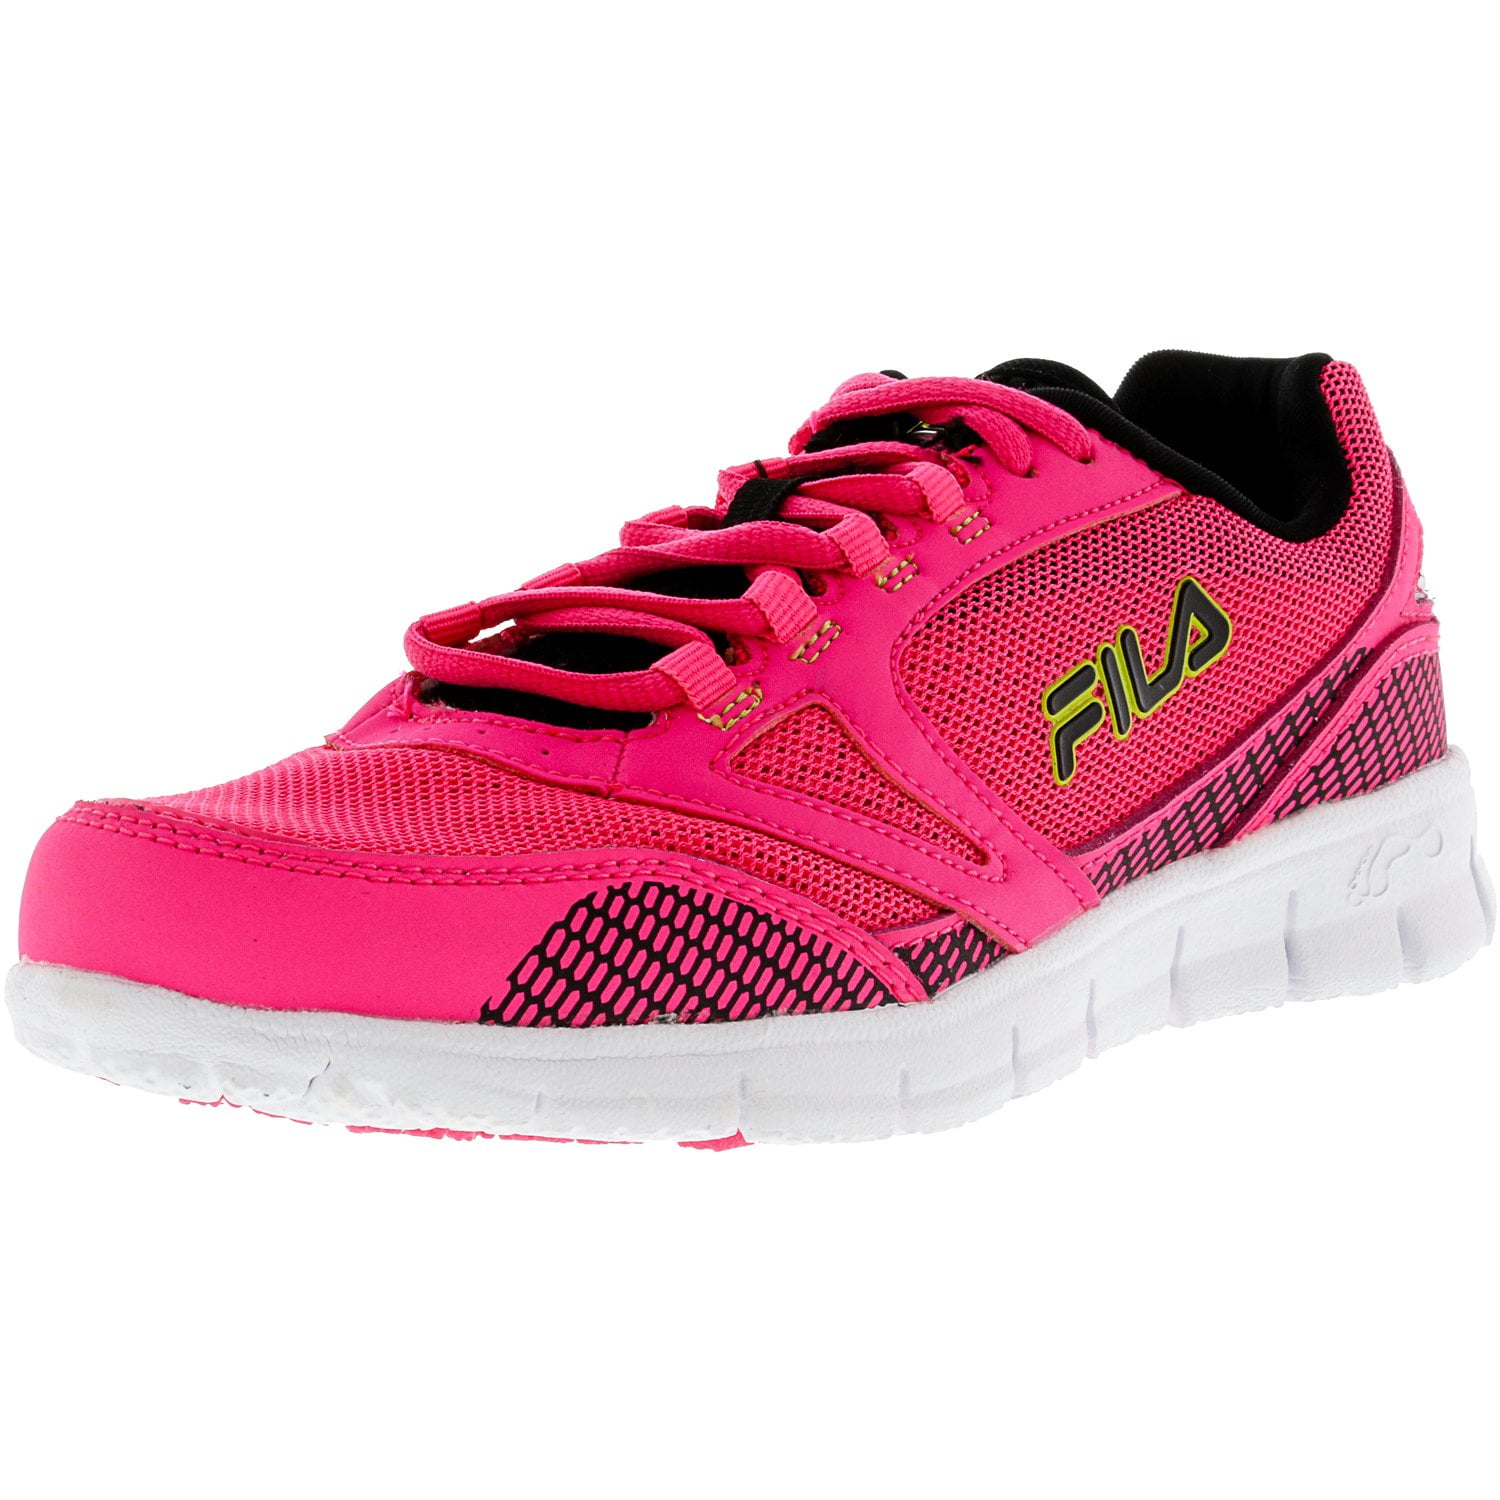 neon pink fila shoes